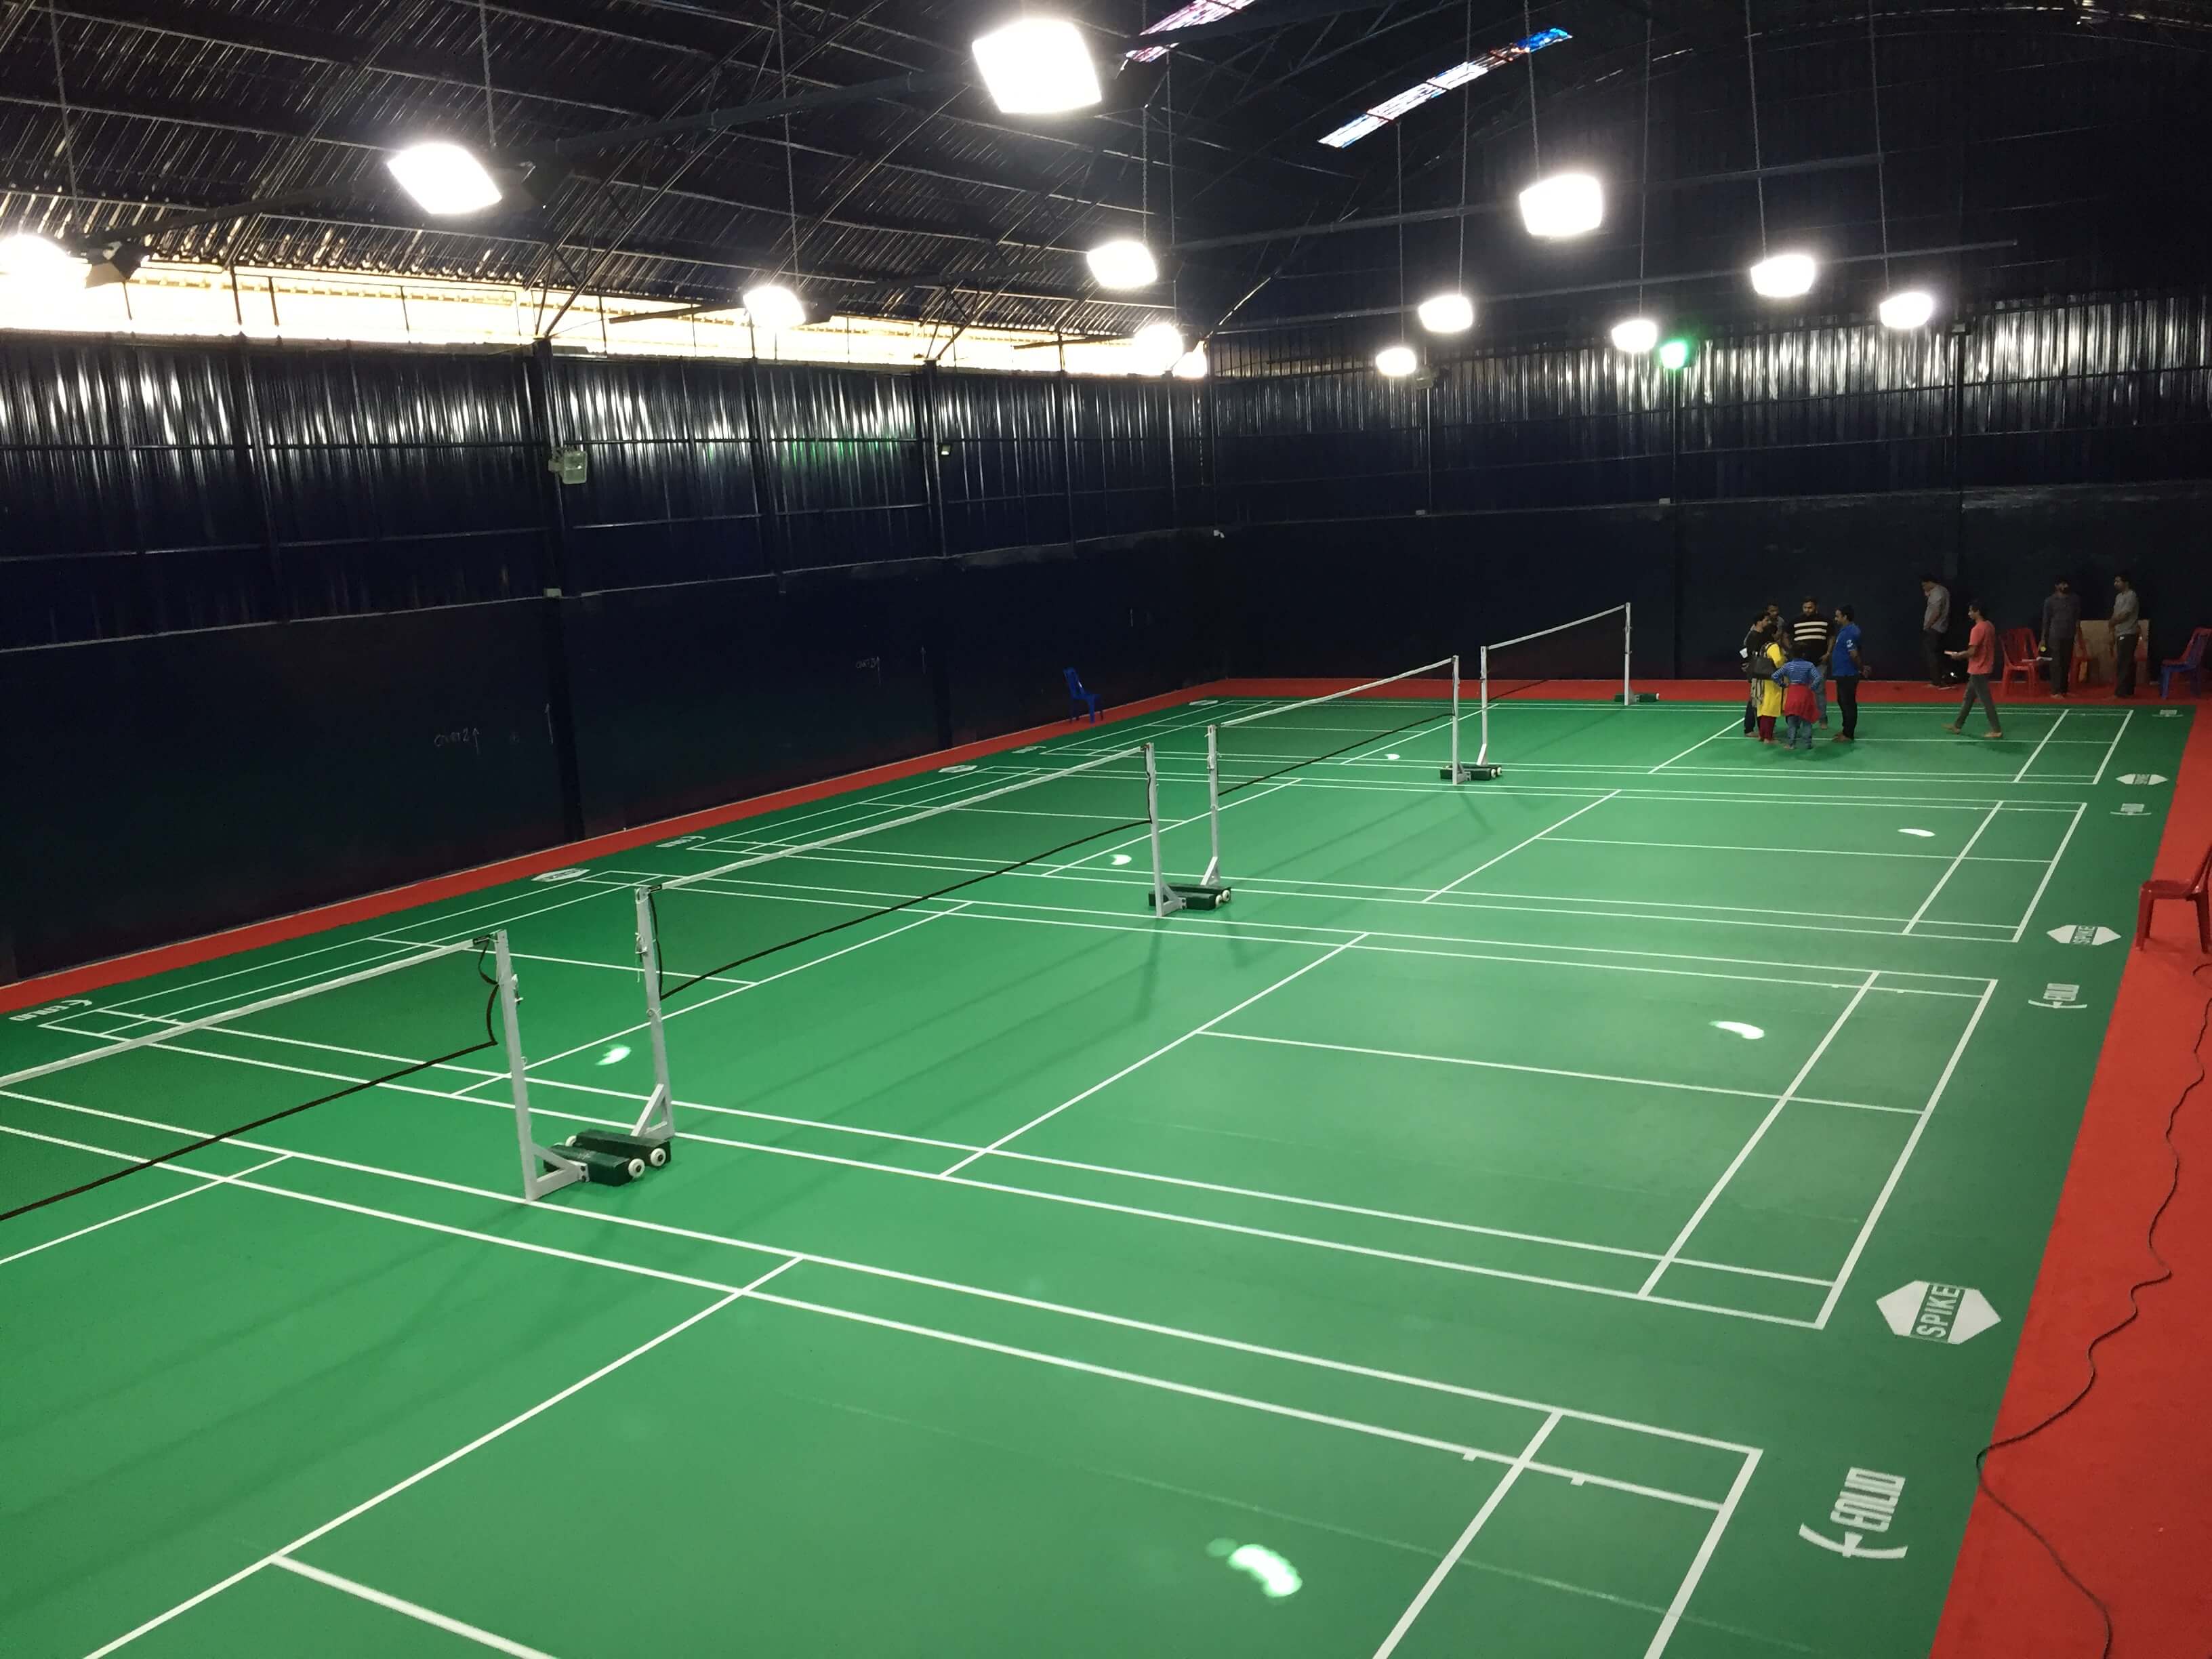 OvalNet Badminton Academy - Sahakar Nagar